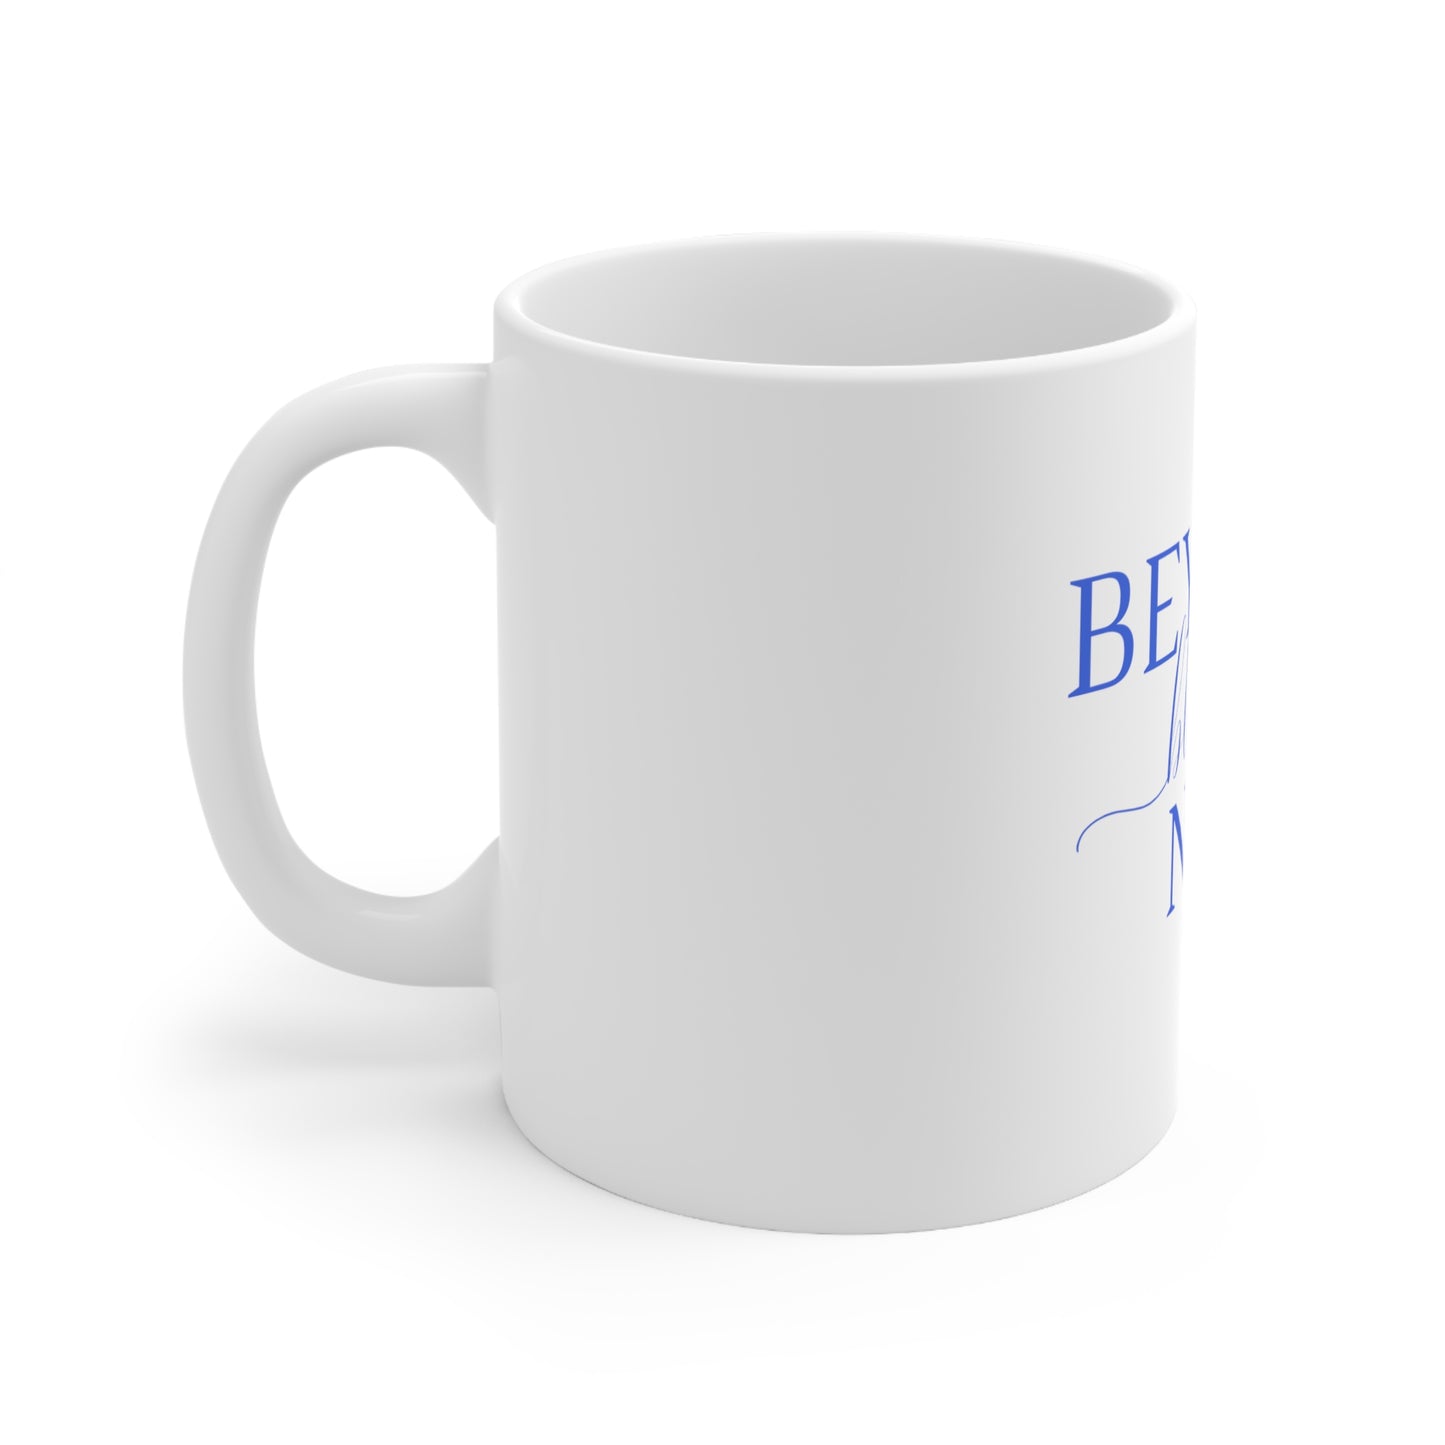 Beyond Blessed NCS - Plain Ceramic Mug 11oz